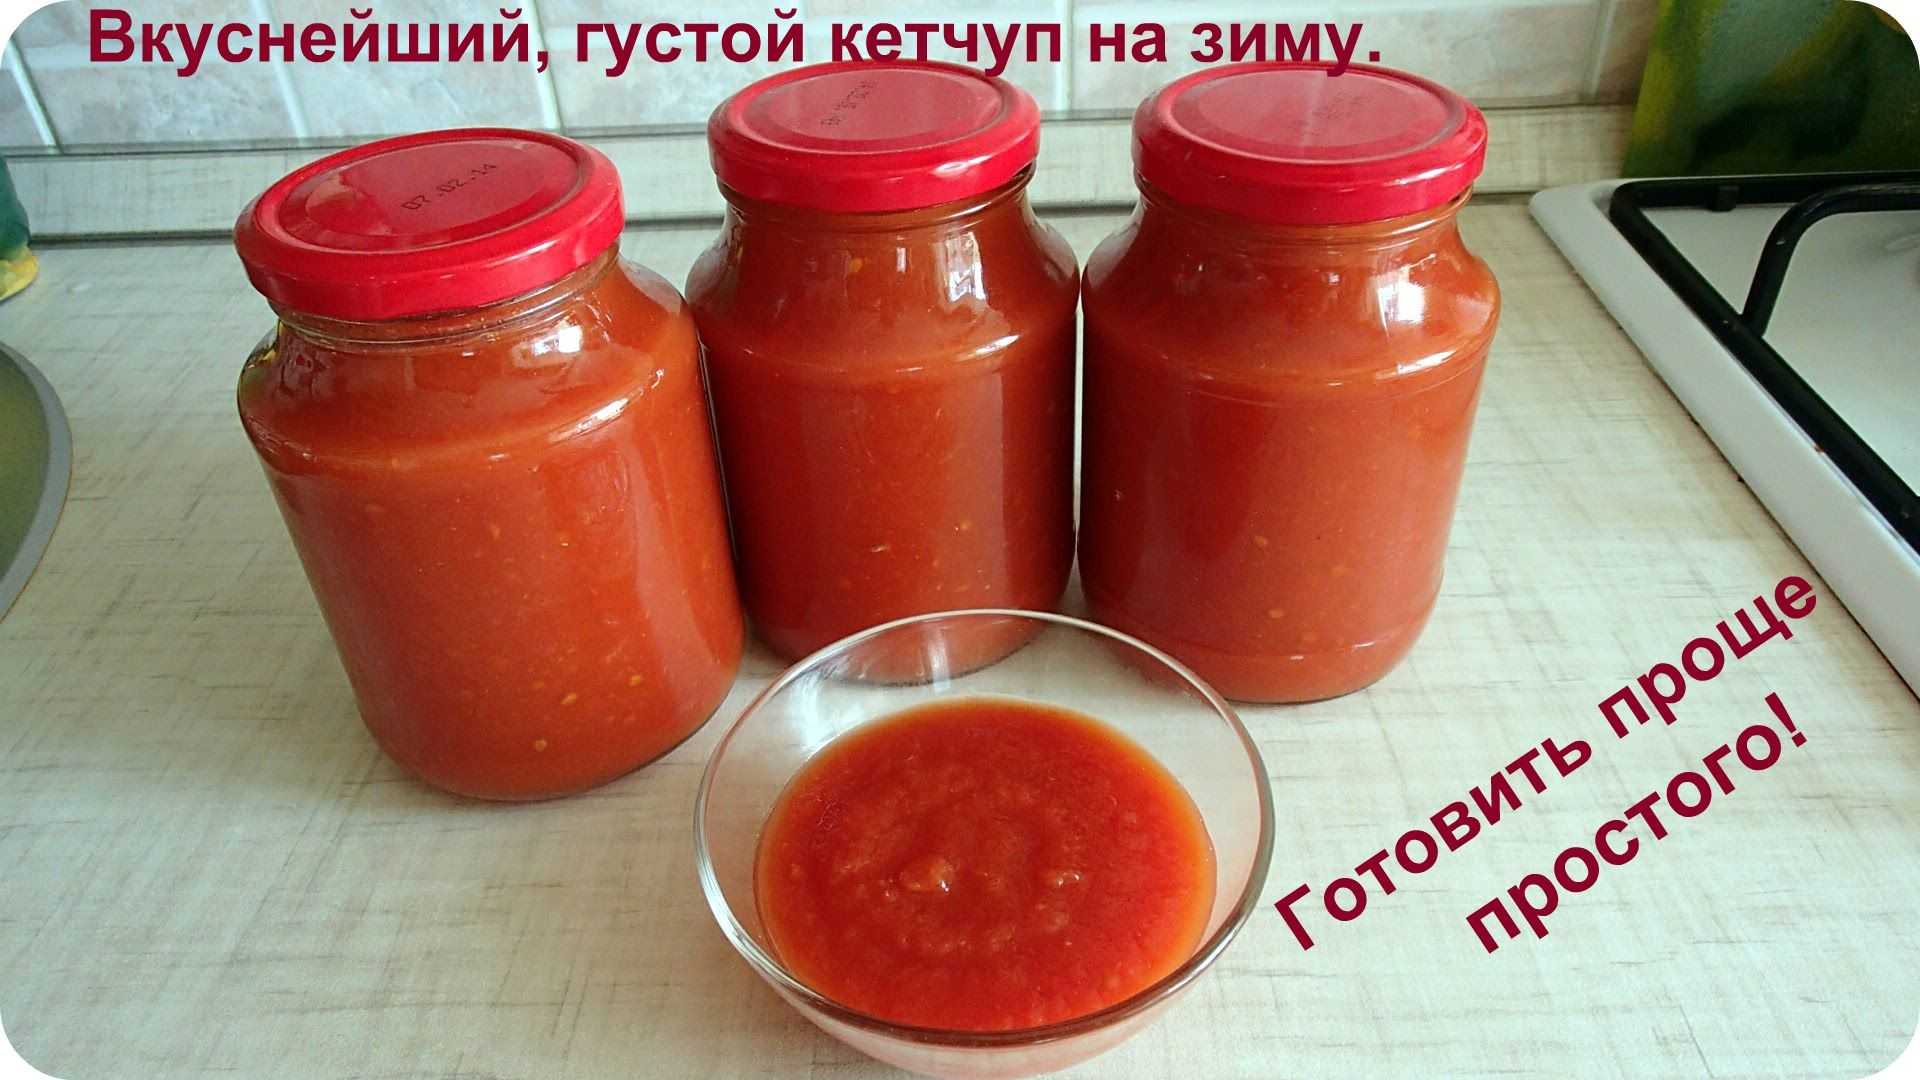 Рецепт густого домашнего кетчупа из помидор. Кетчуп. Кетчуп на зиму. Домашний кетчуп из помидор на зиму. Приготовление кетчупа в домашних условиях.